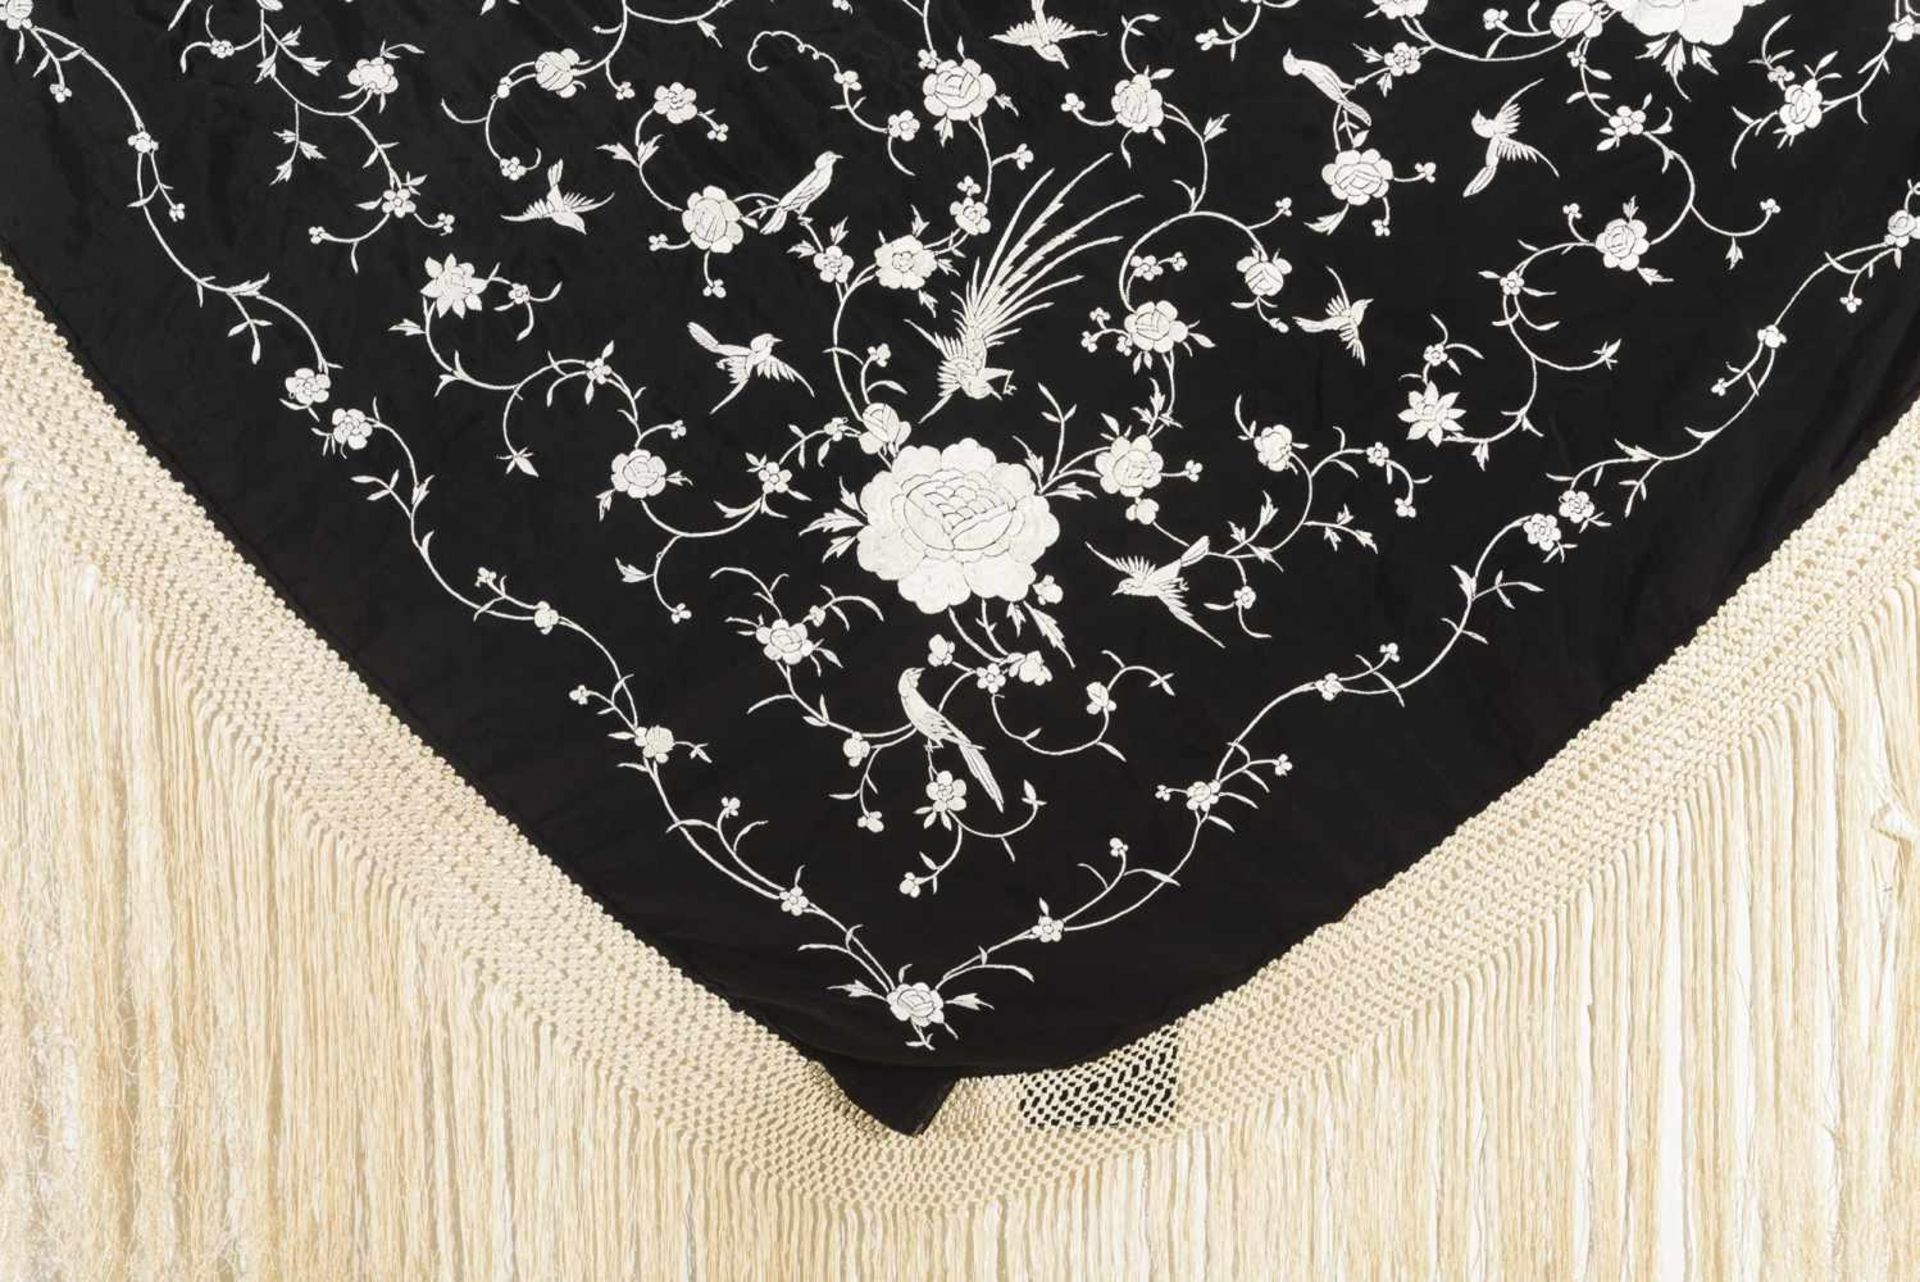 MANTÓN DE MANILA S.XIX-XX En crespón negro con decoración bordada con motivos florales y de aves